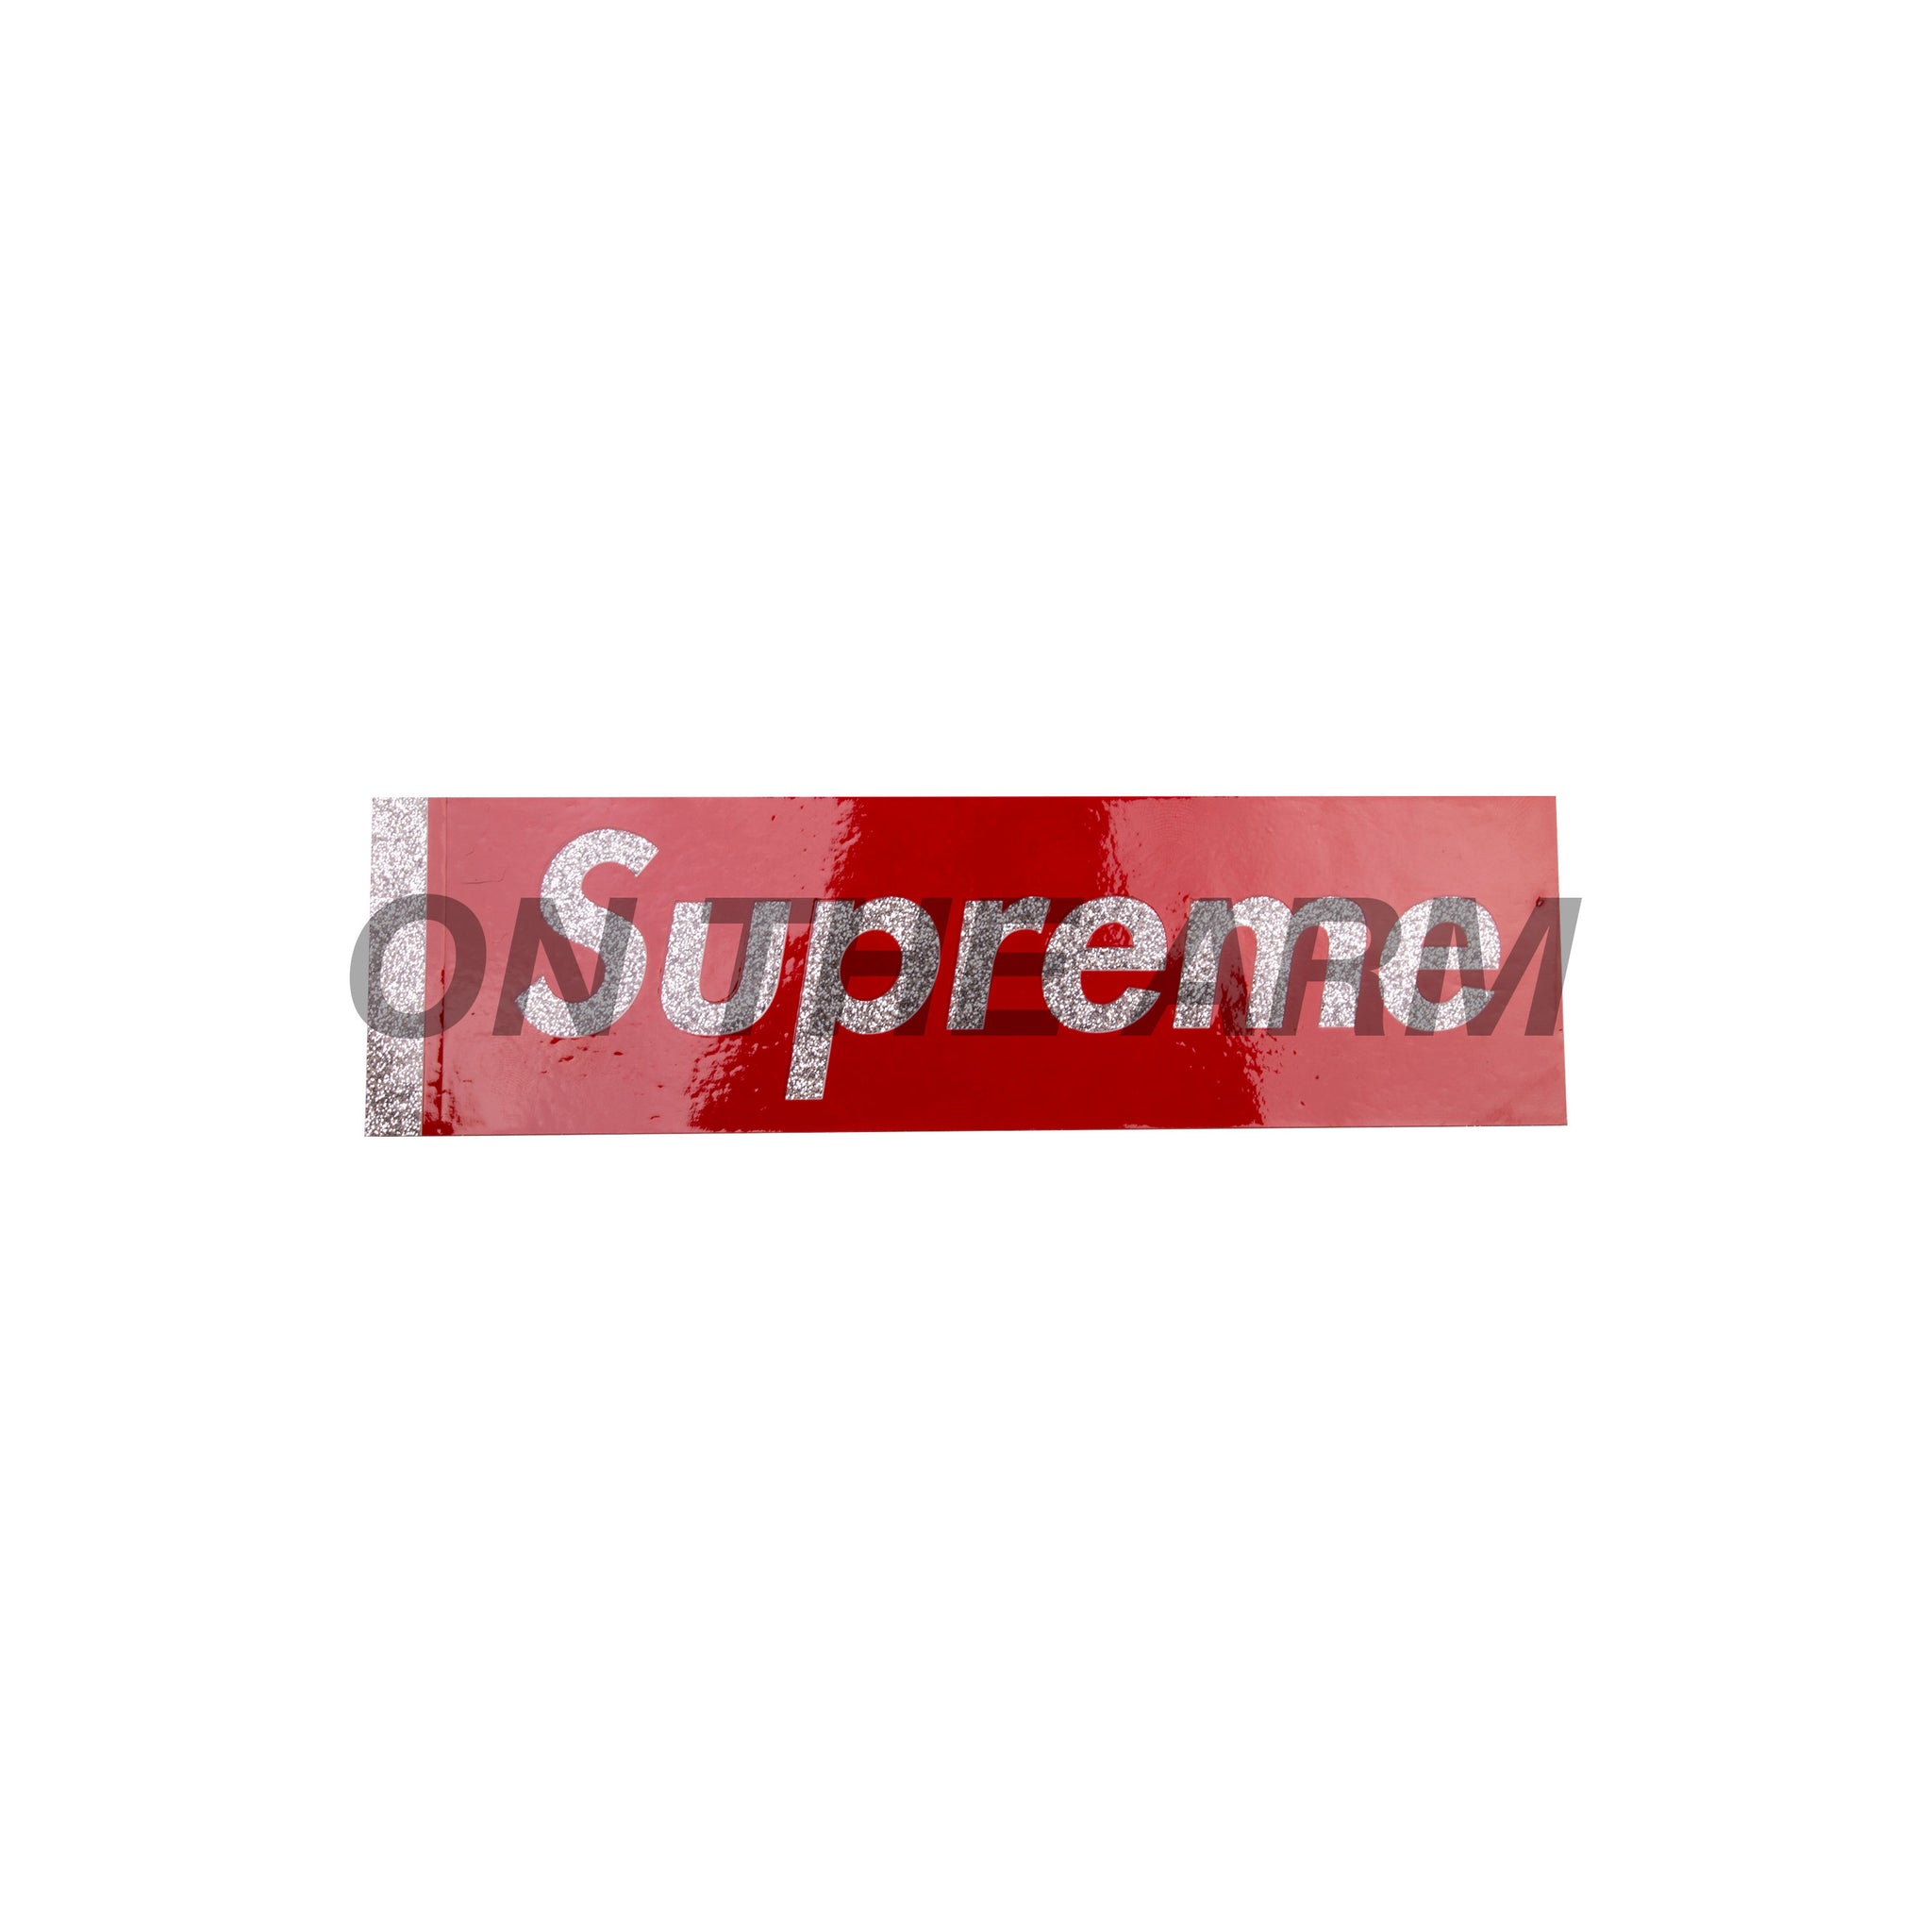 Supreme Red Glitter Box Logo Sticker